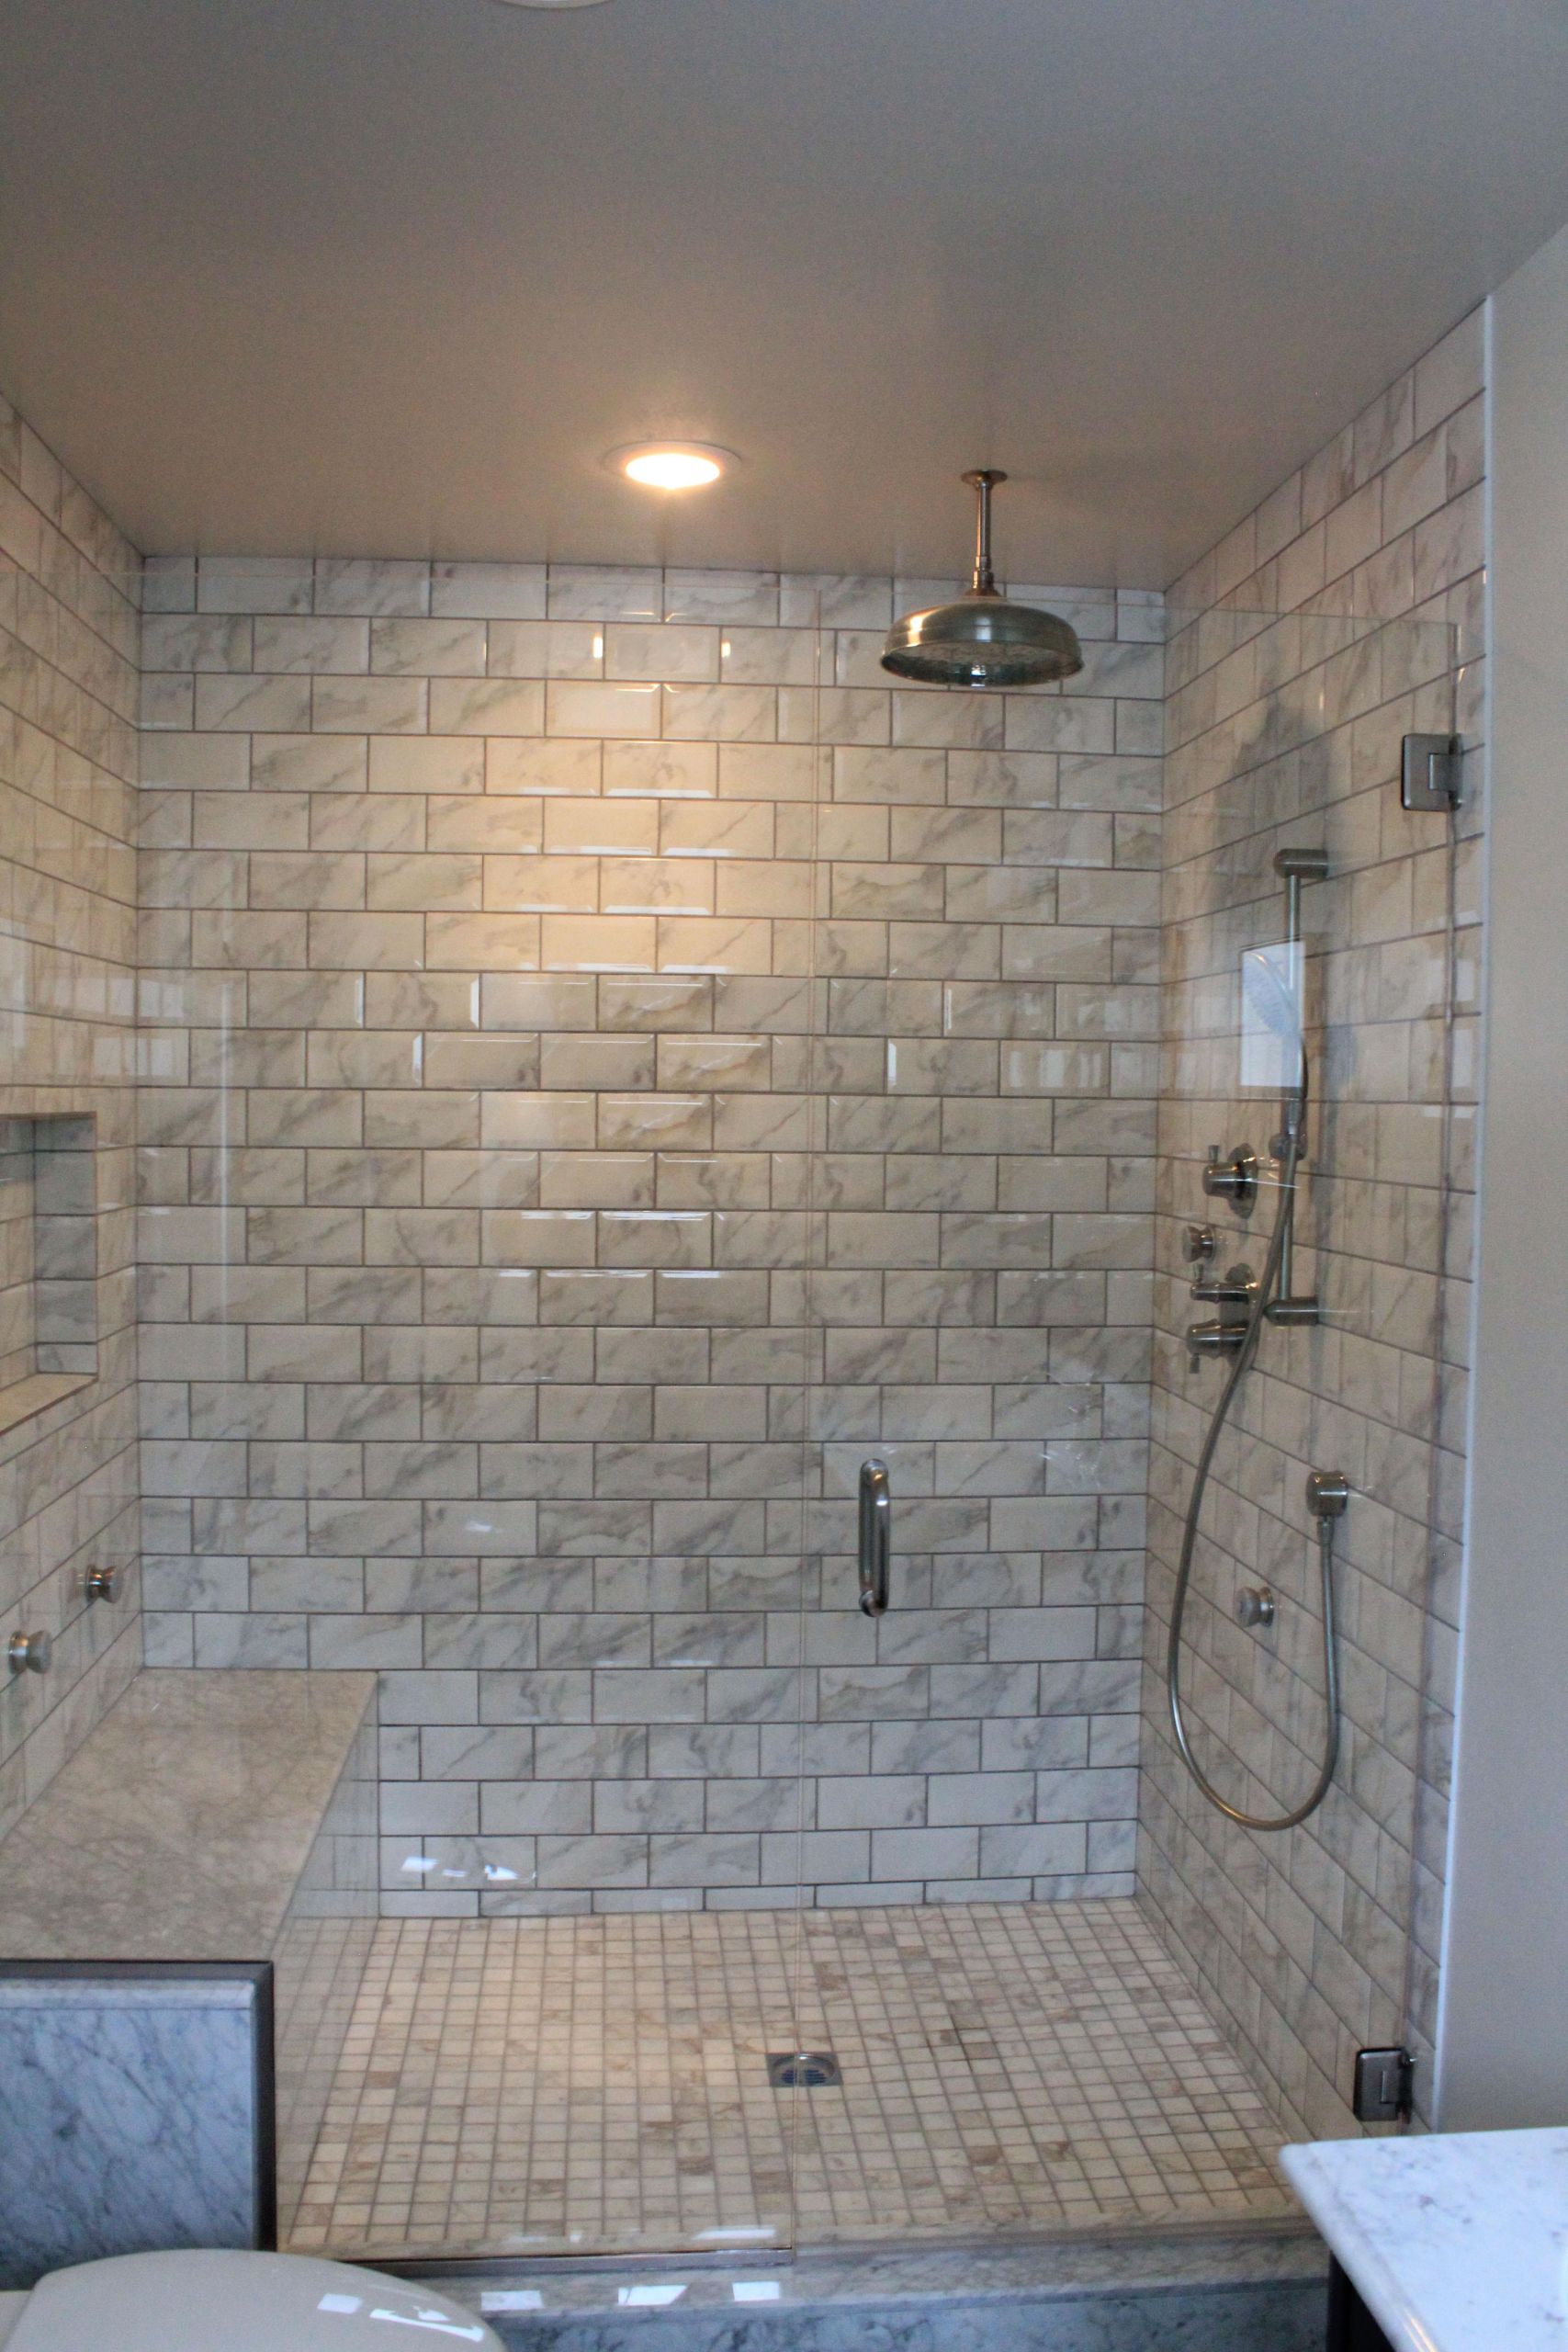 Bathroom Shower Tiles Ideas
 Bathroom Tiled Shower Ideas You Can Install For Your